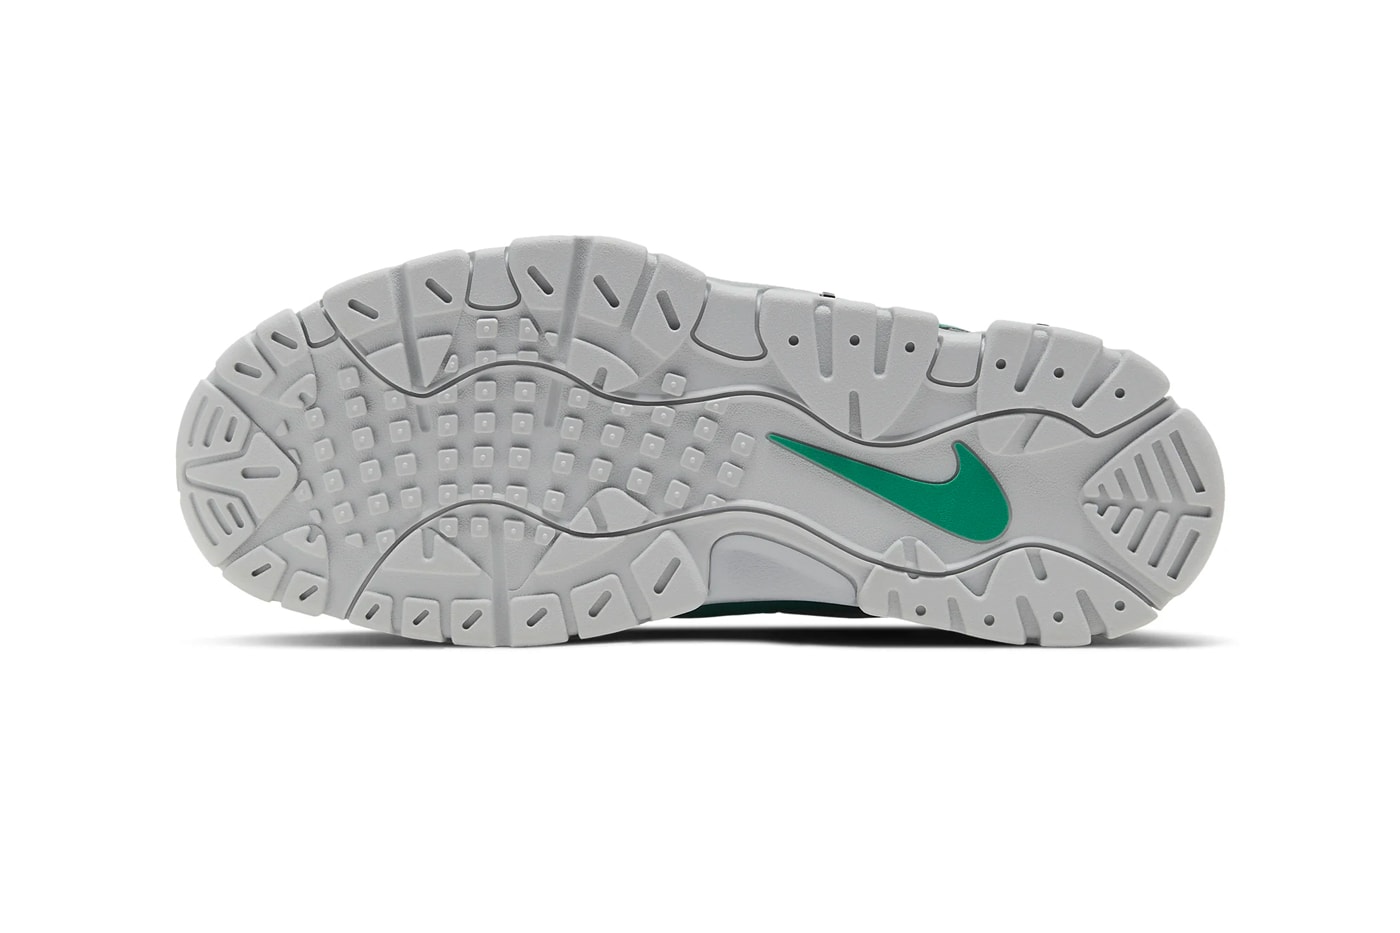 Nike Air Barrage Low Neptune Green Release Info CW3129-001 Buy Price Grey Fog Vast Grey